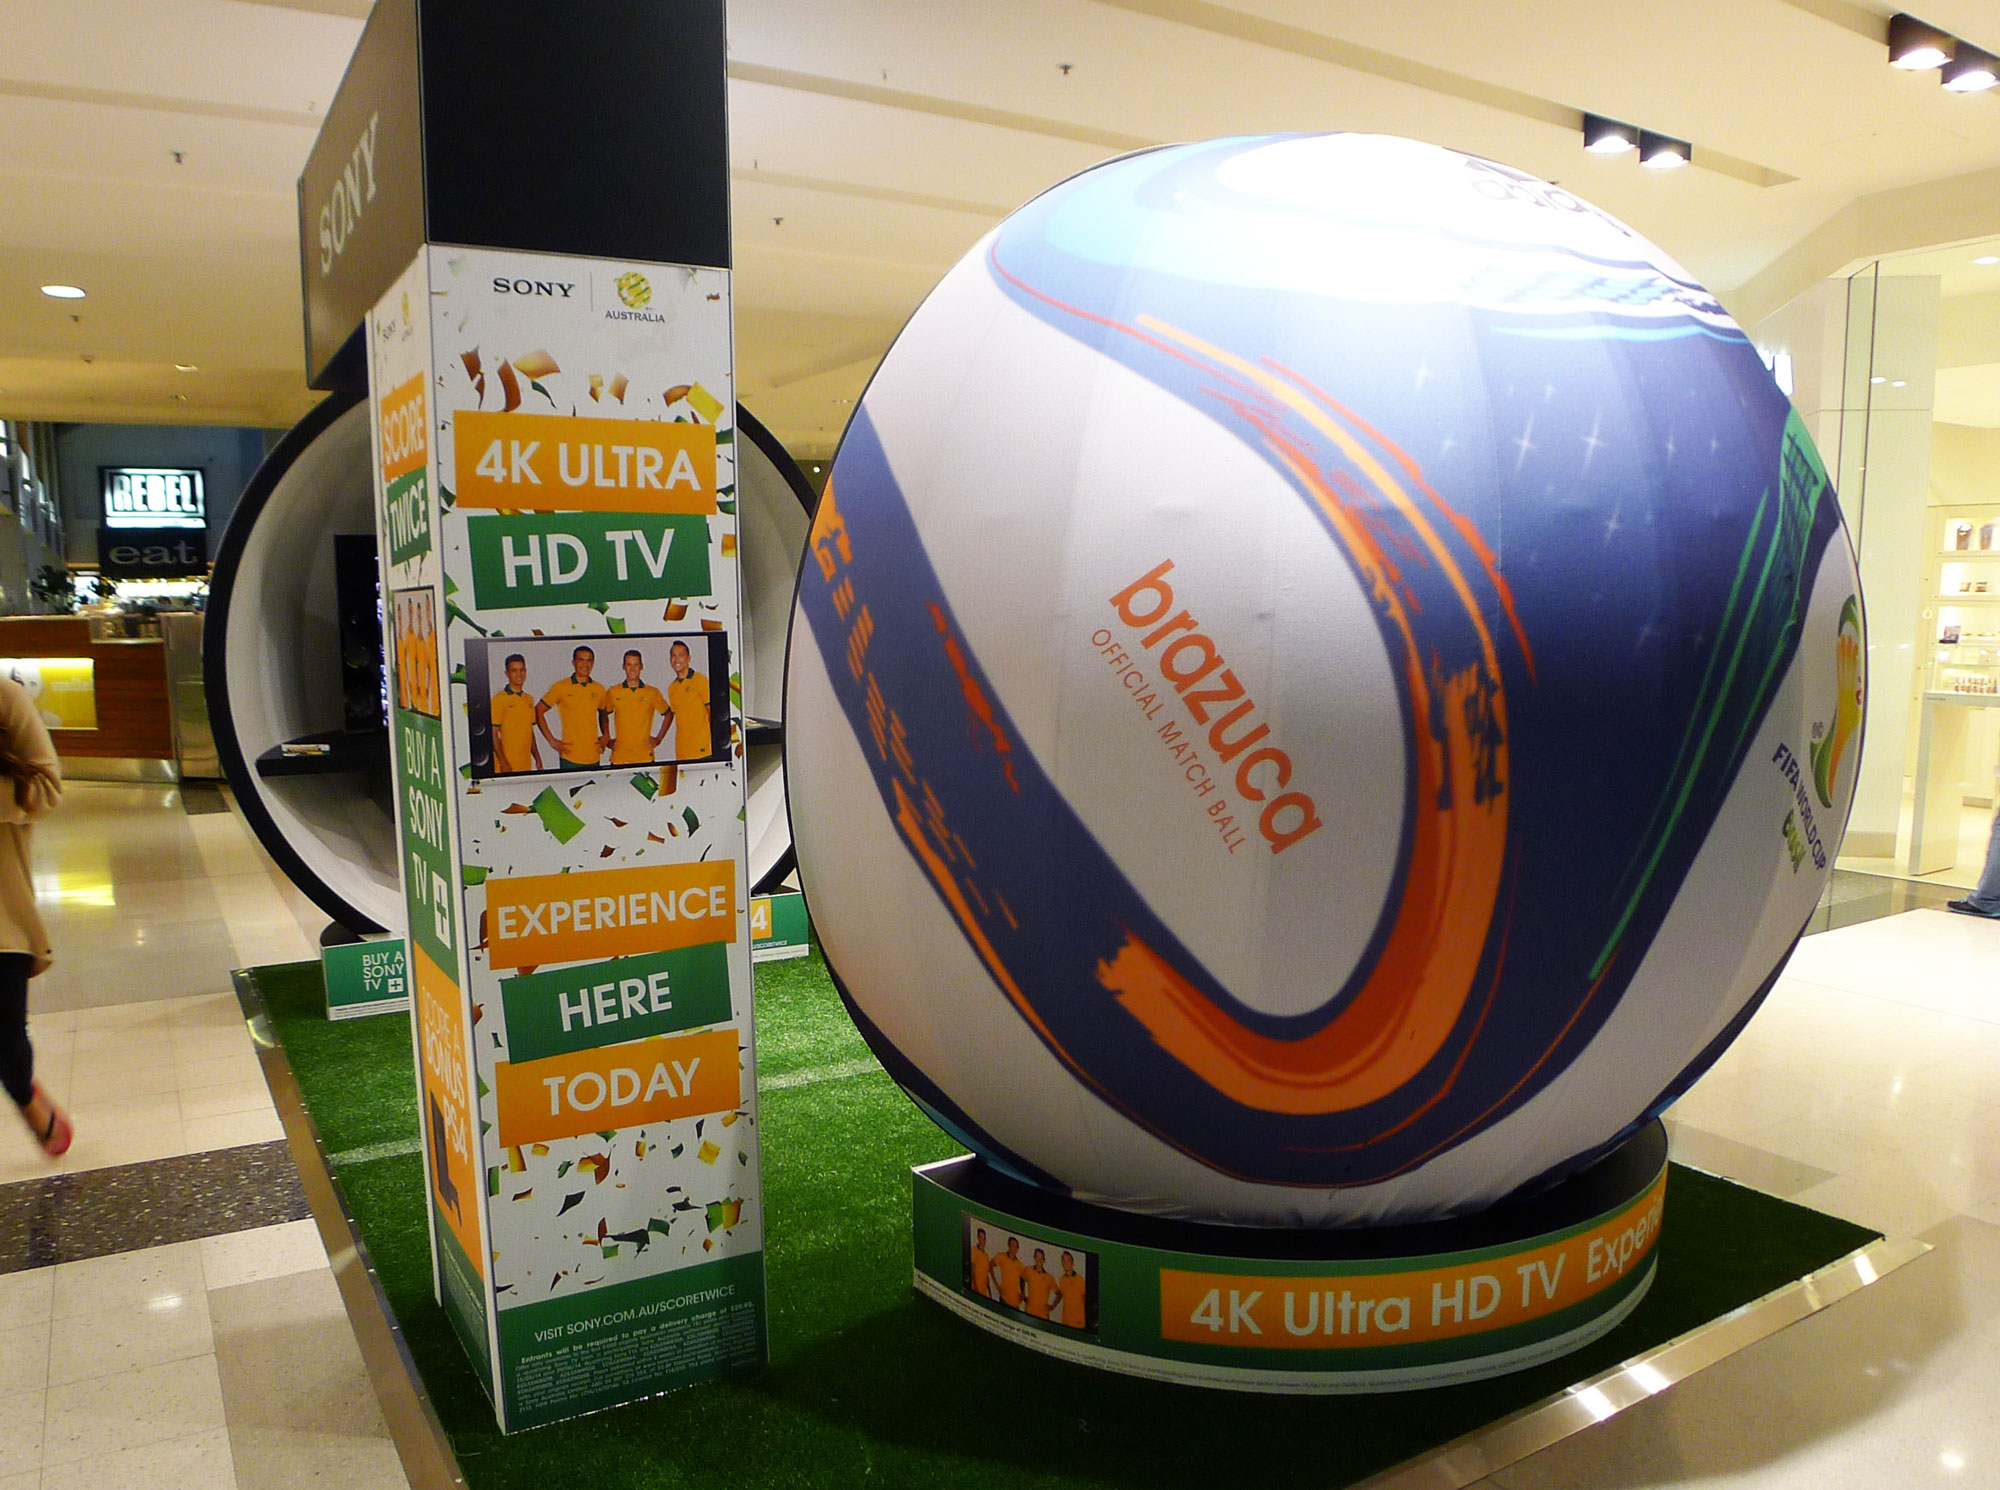 Sony 2012 Socceroos retail pop up